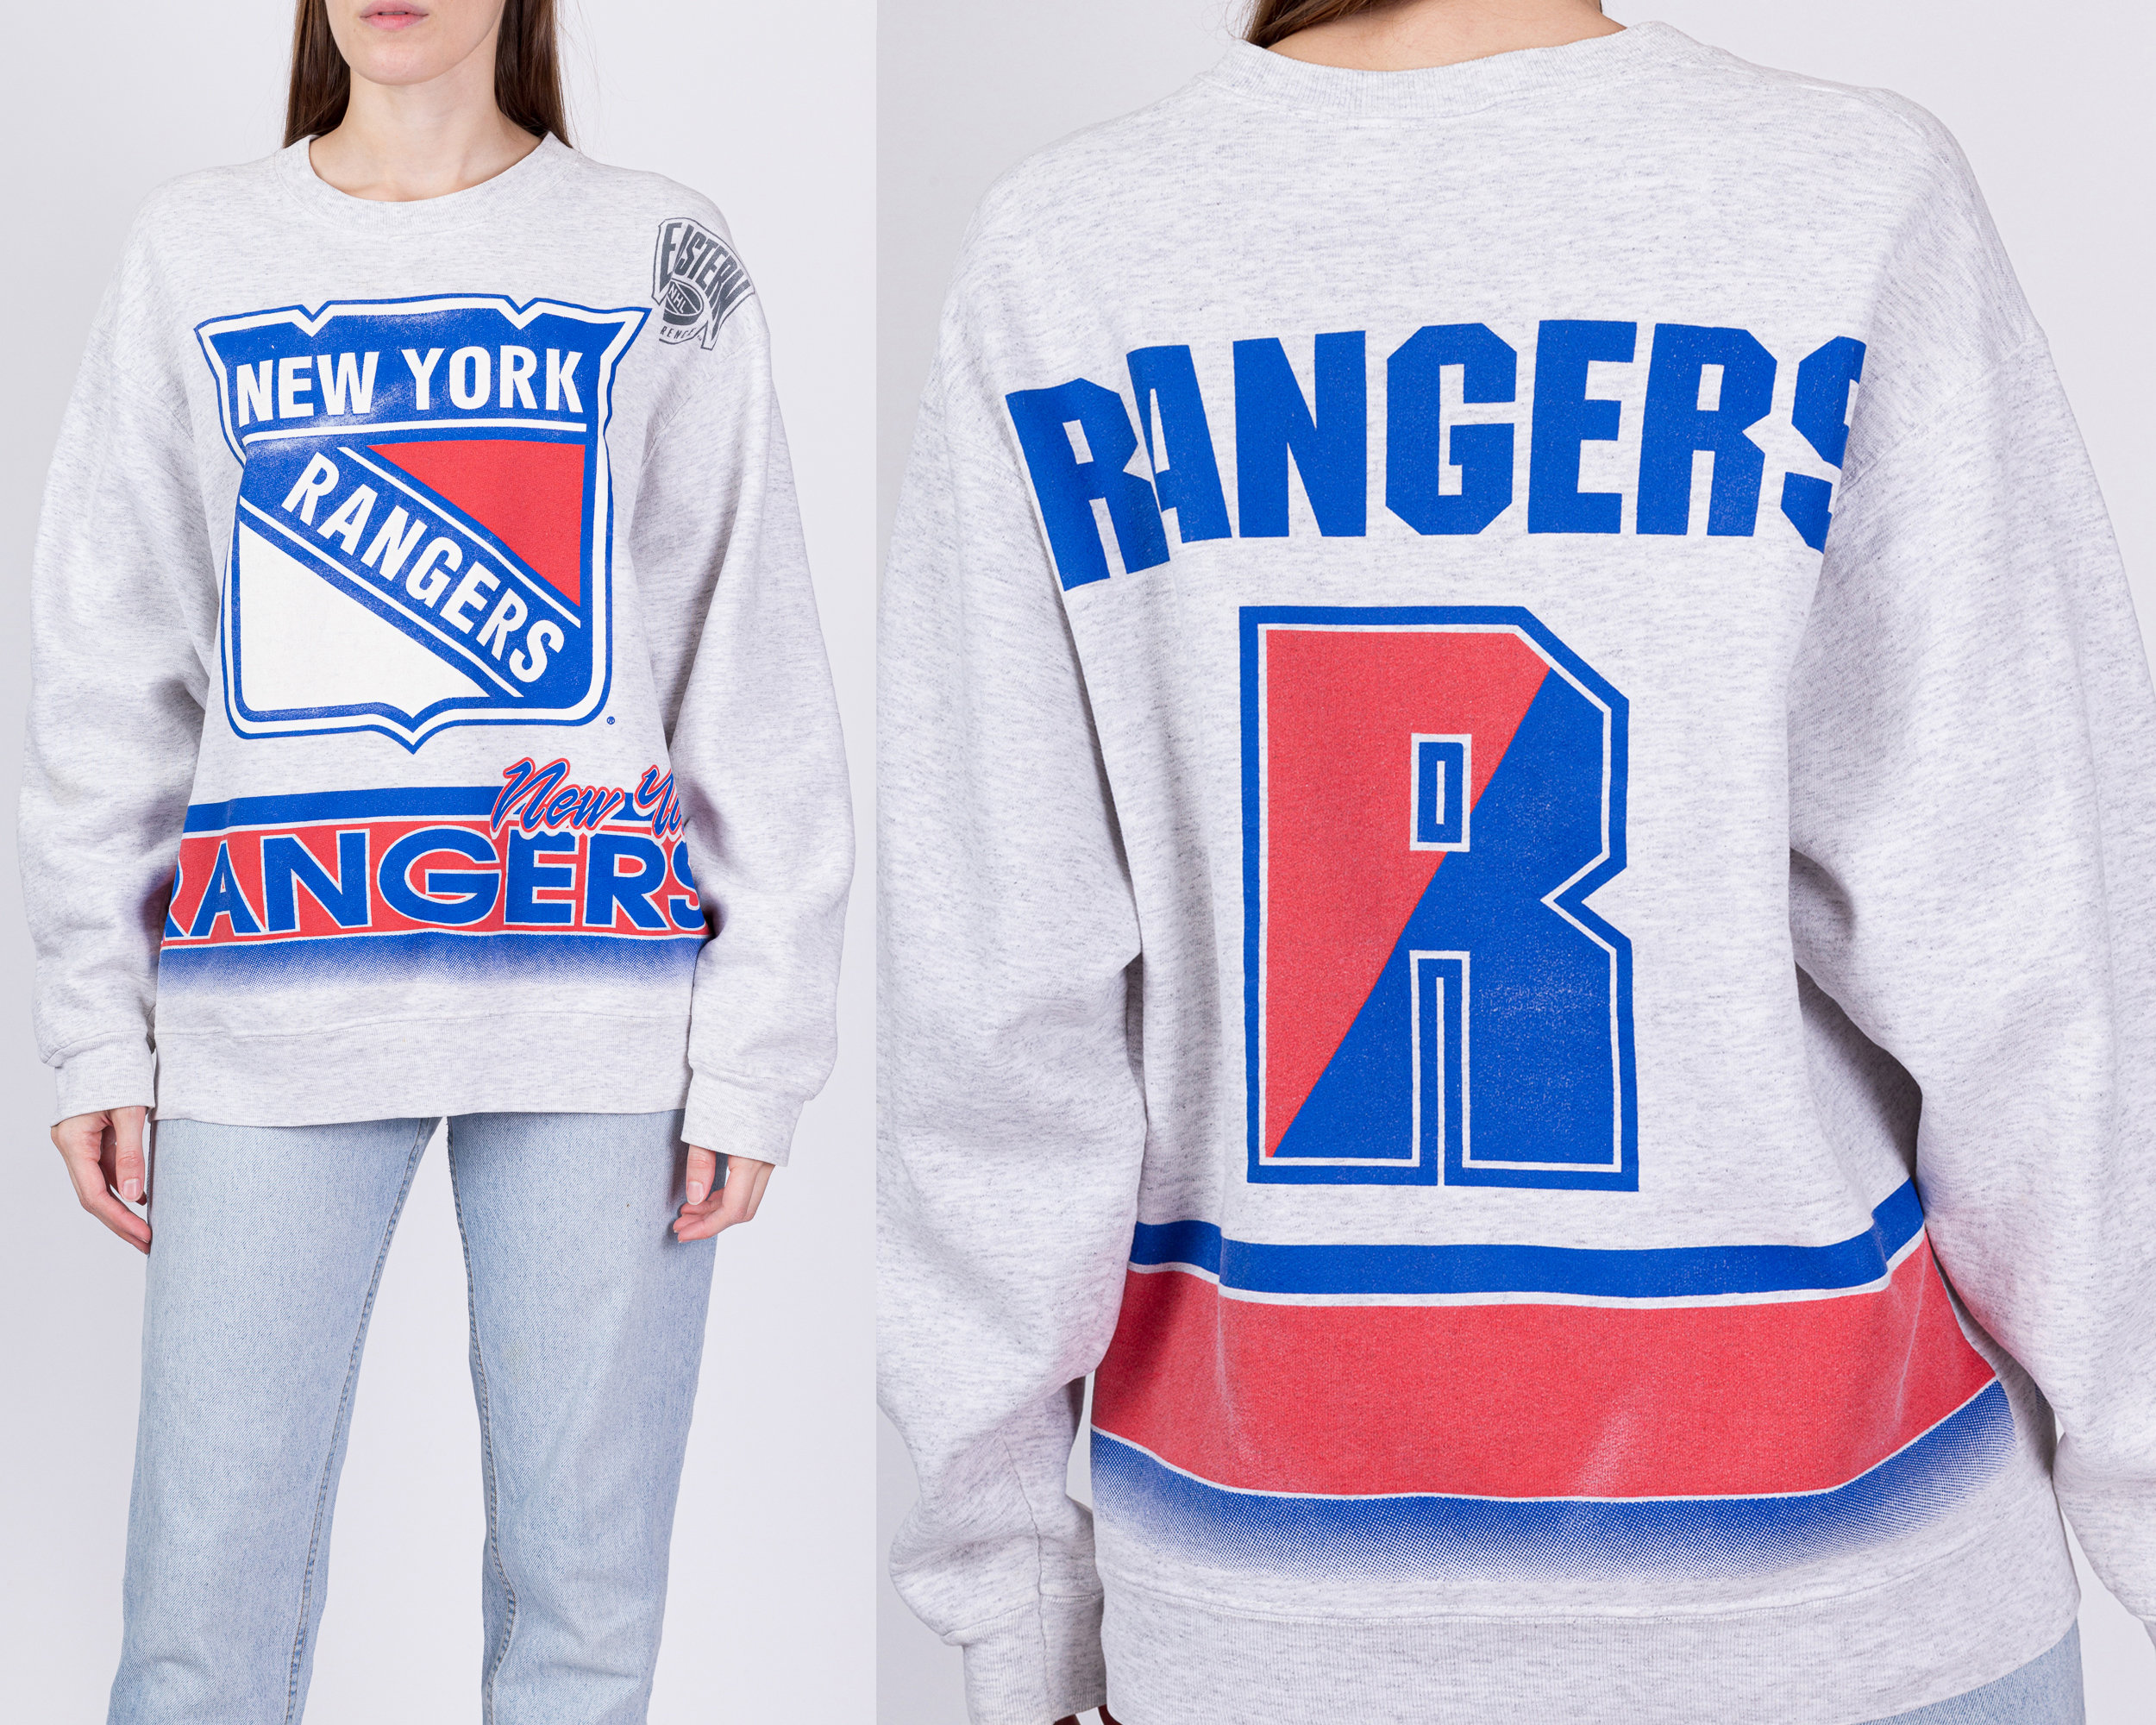 NHL New York Rangers Women's Fleece Hooded Sweatshirt - S